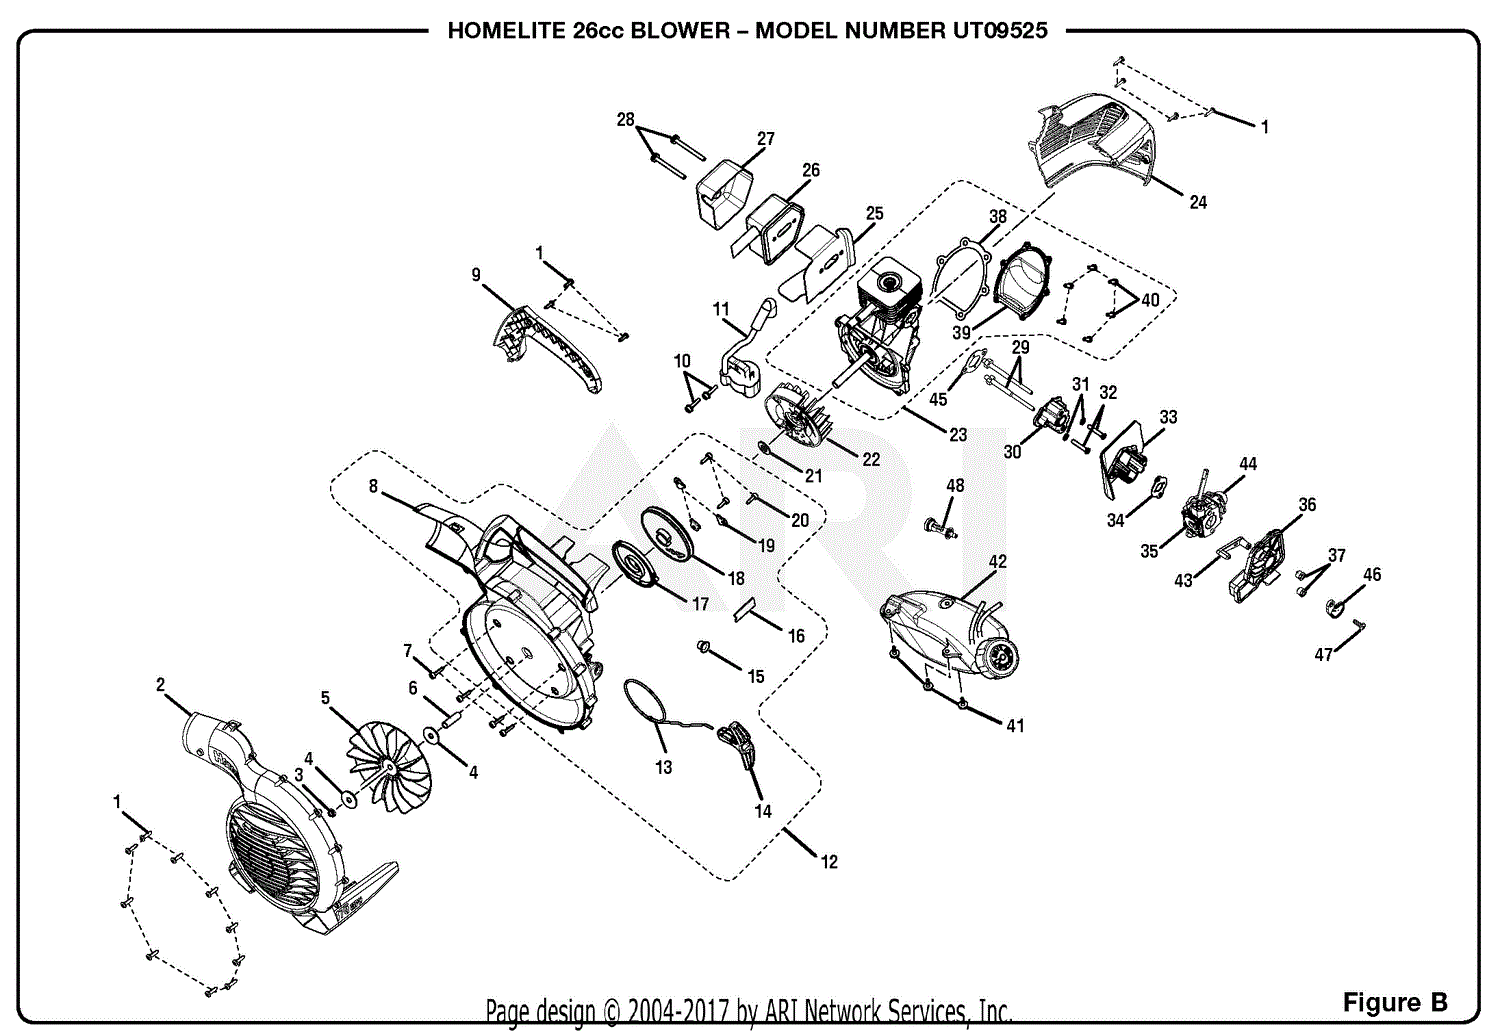 homelite-ut09525-26cc-blower-parts-diagram-for-figure-b